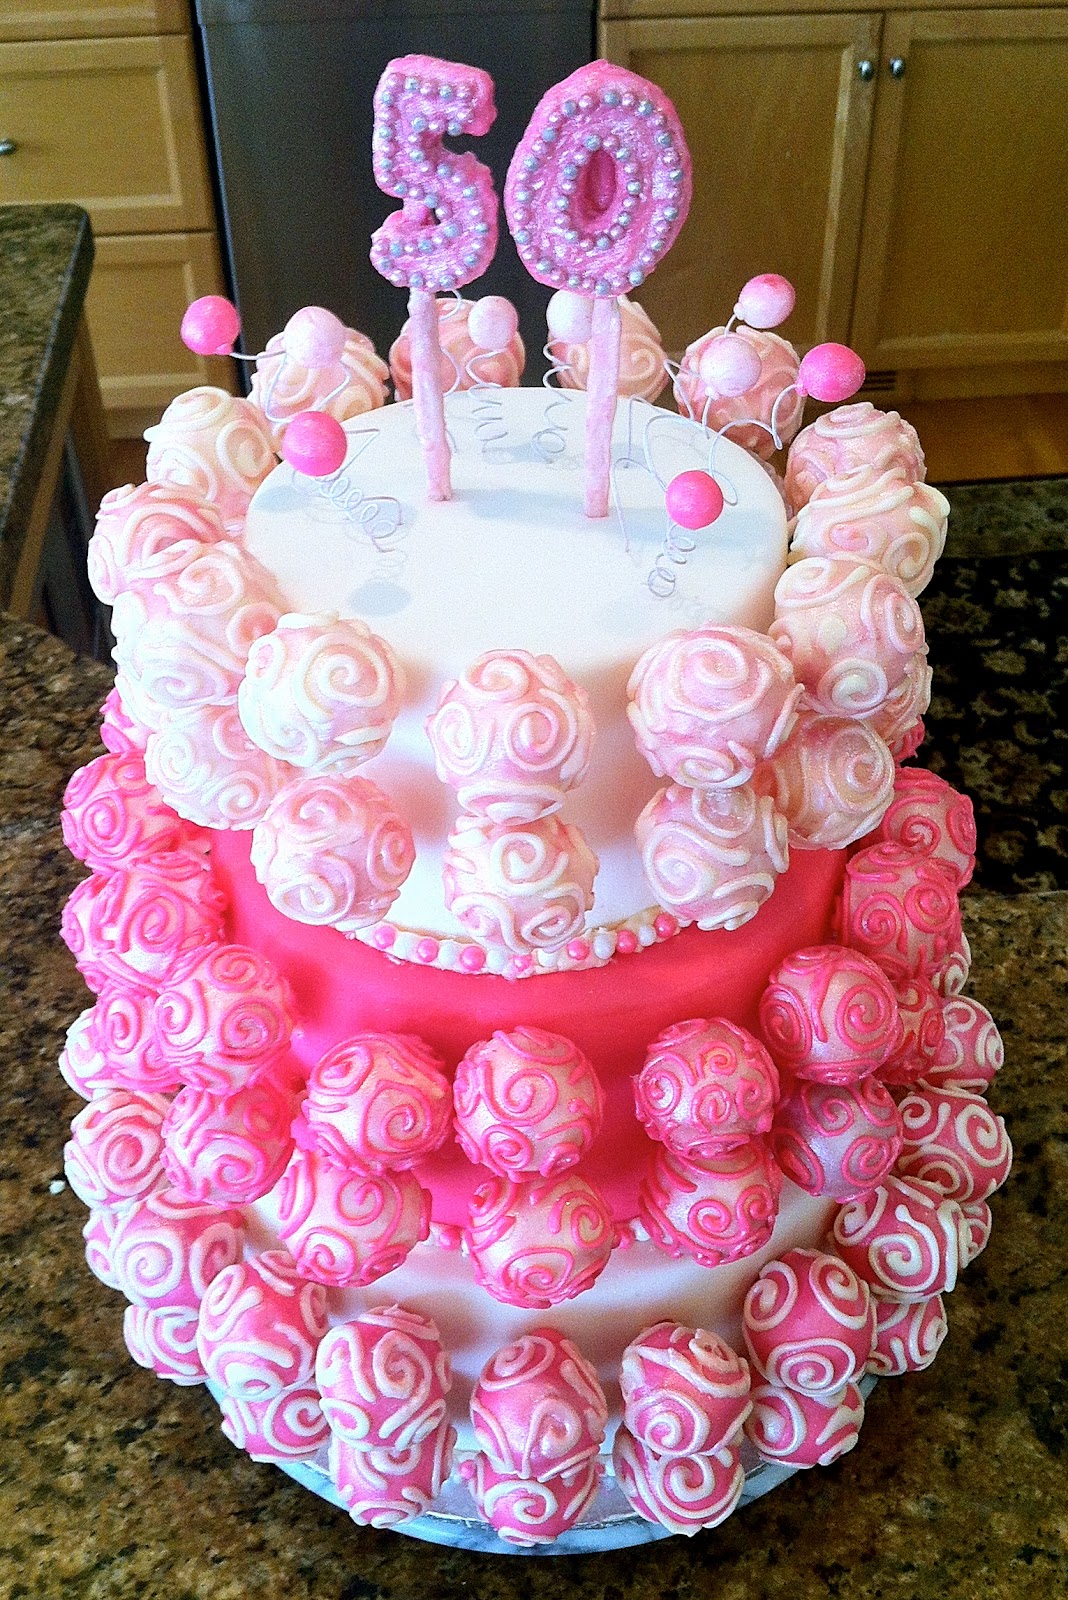 Delaine's Skinny Delights Birthday Cake Pop Cake!